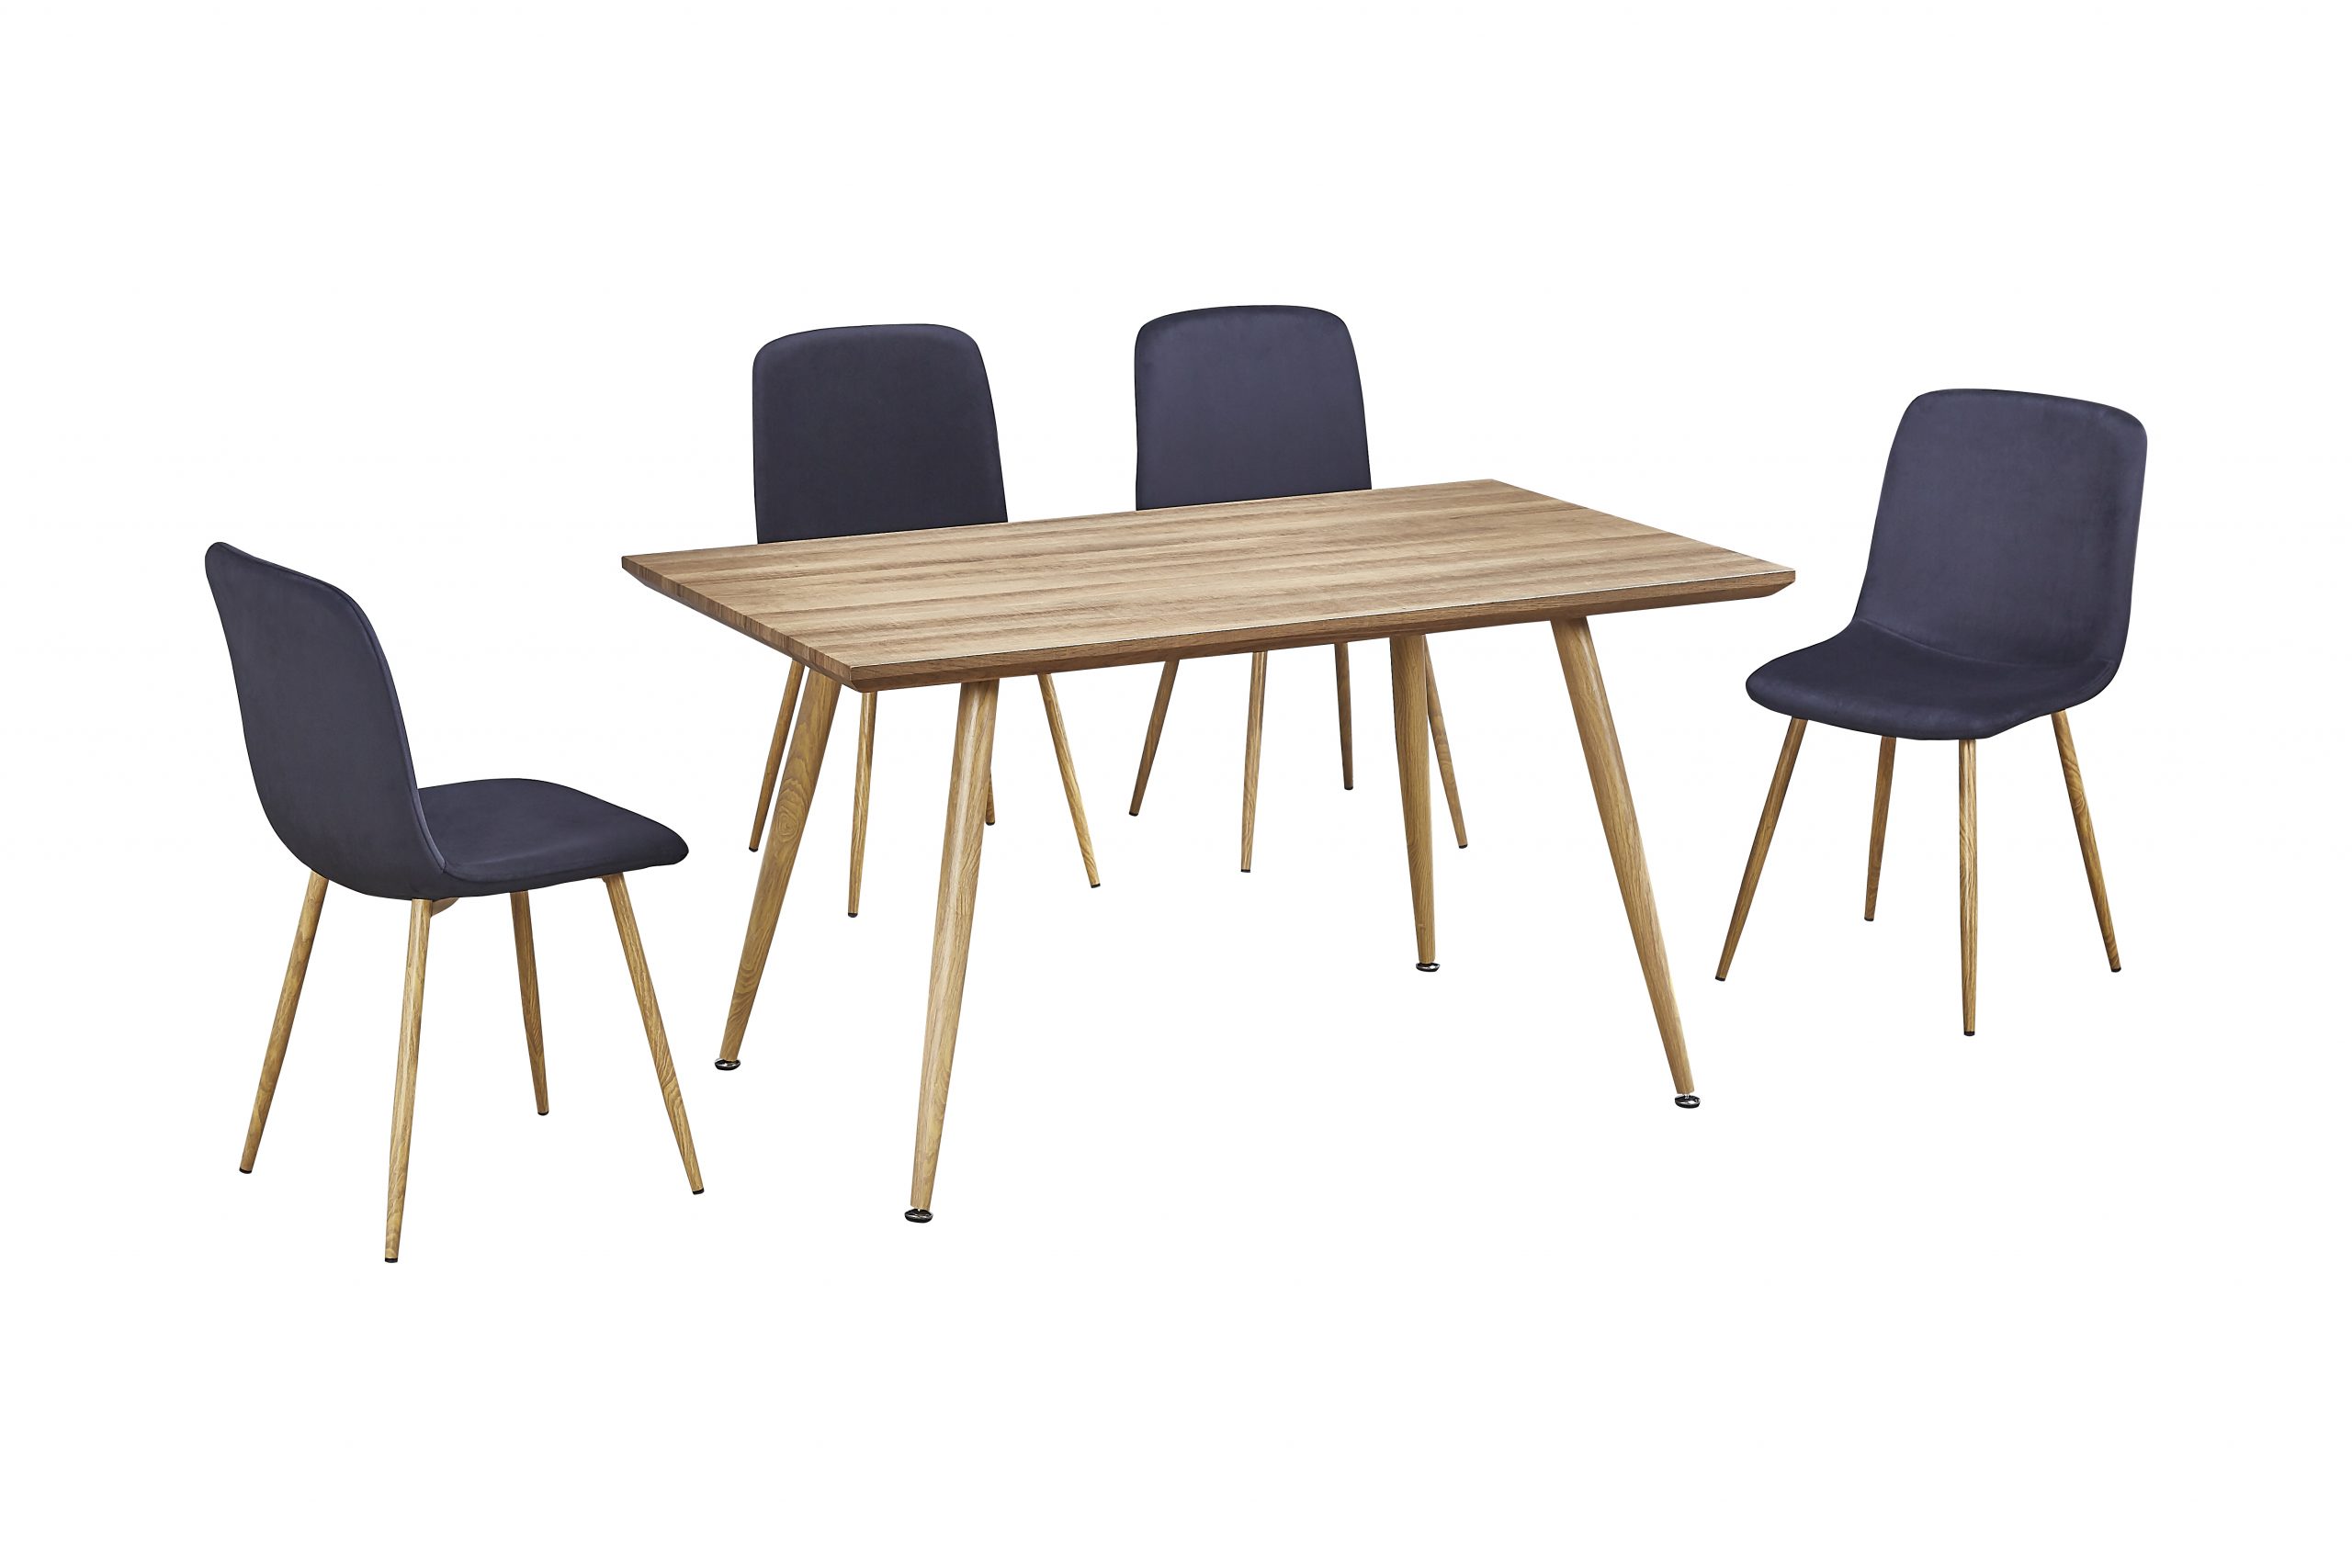 4Pcs Modern Dinning Chairs - W26802872